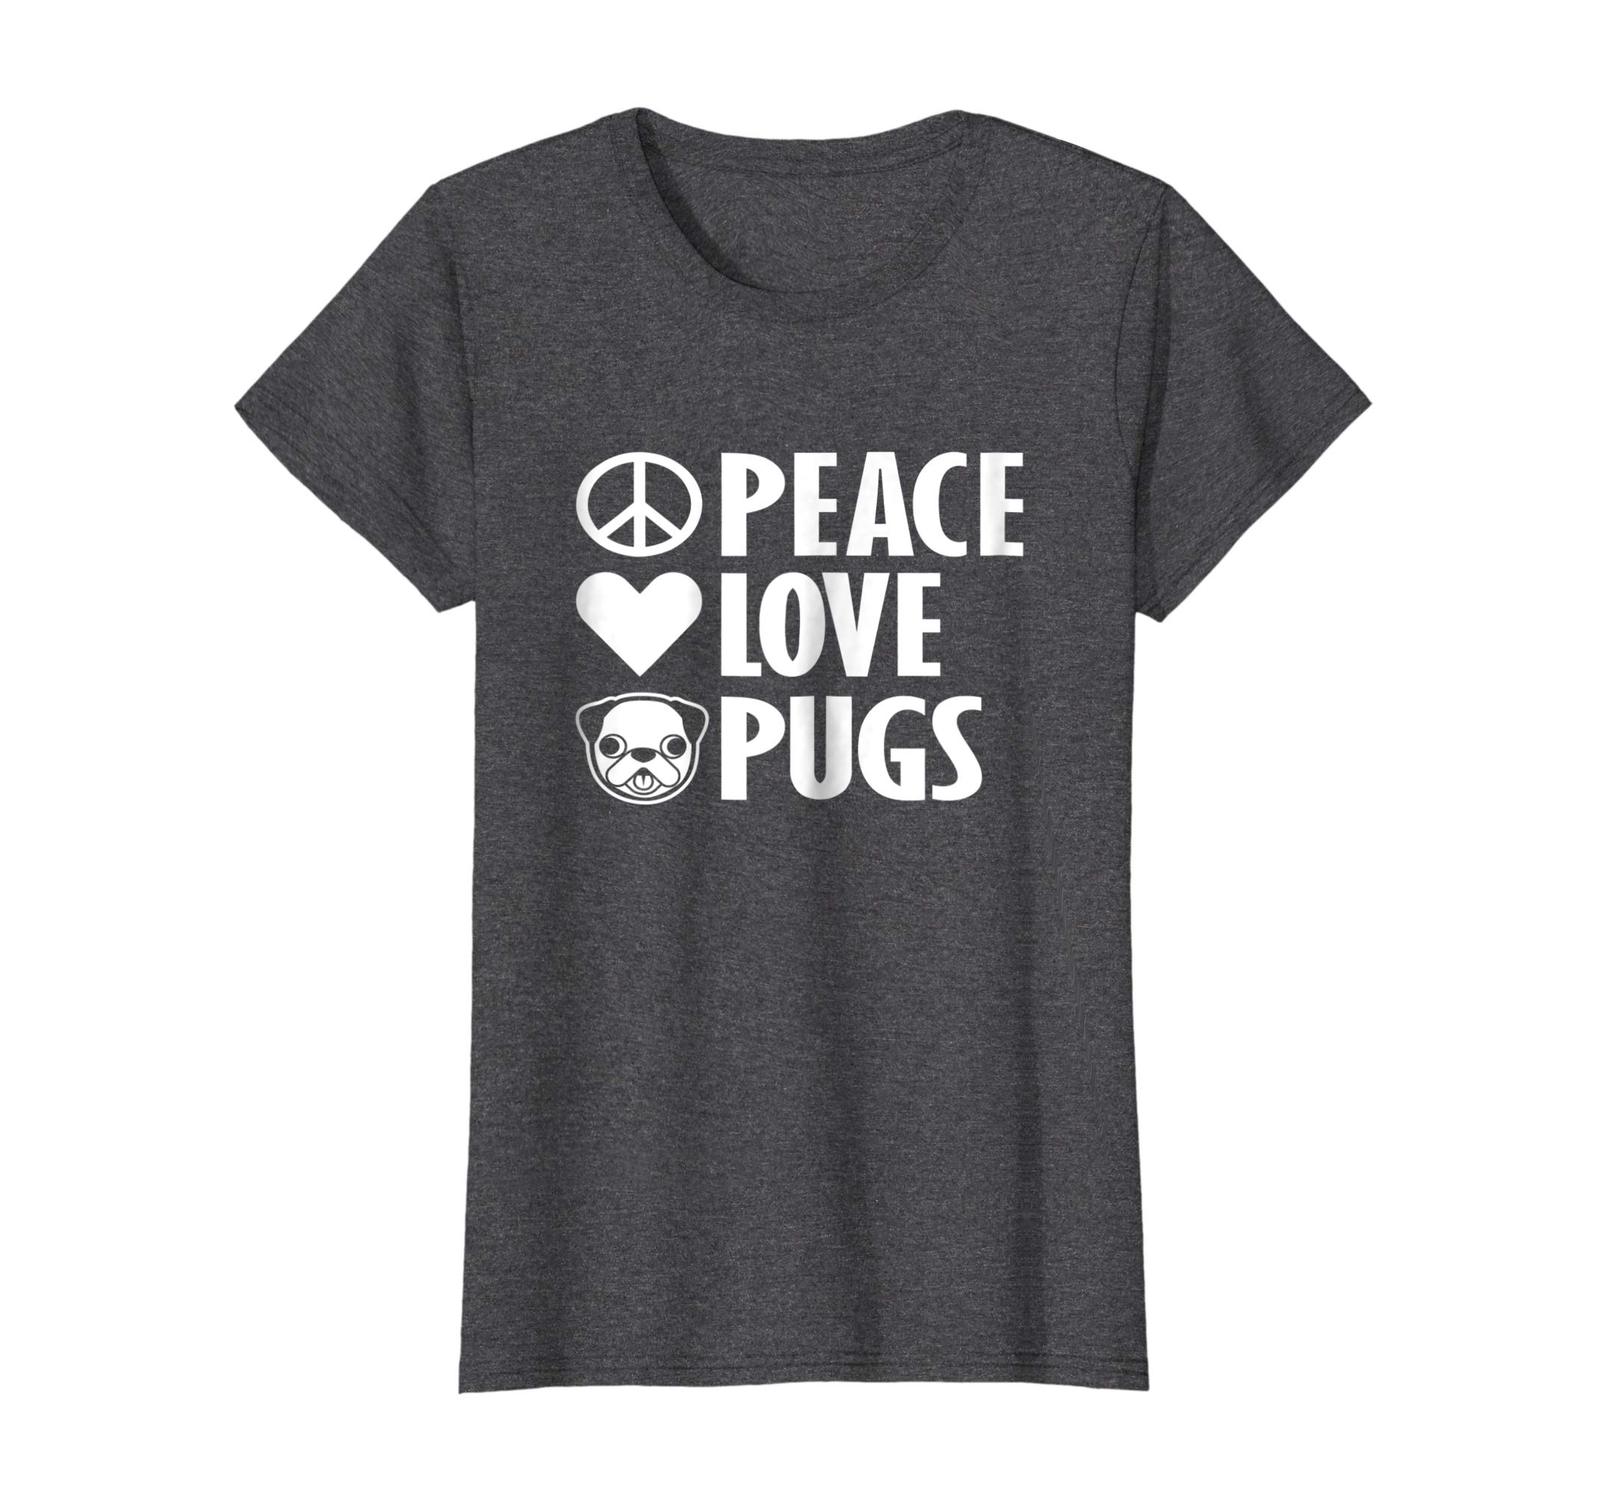 Dog Fashion - Dog Shirts Peace Love Pugs Tees Men Women Kids Animal Lovers Wowen